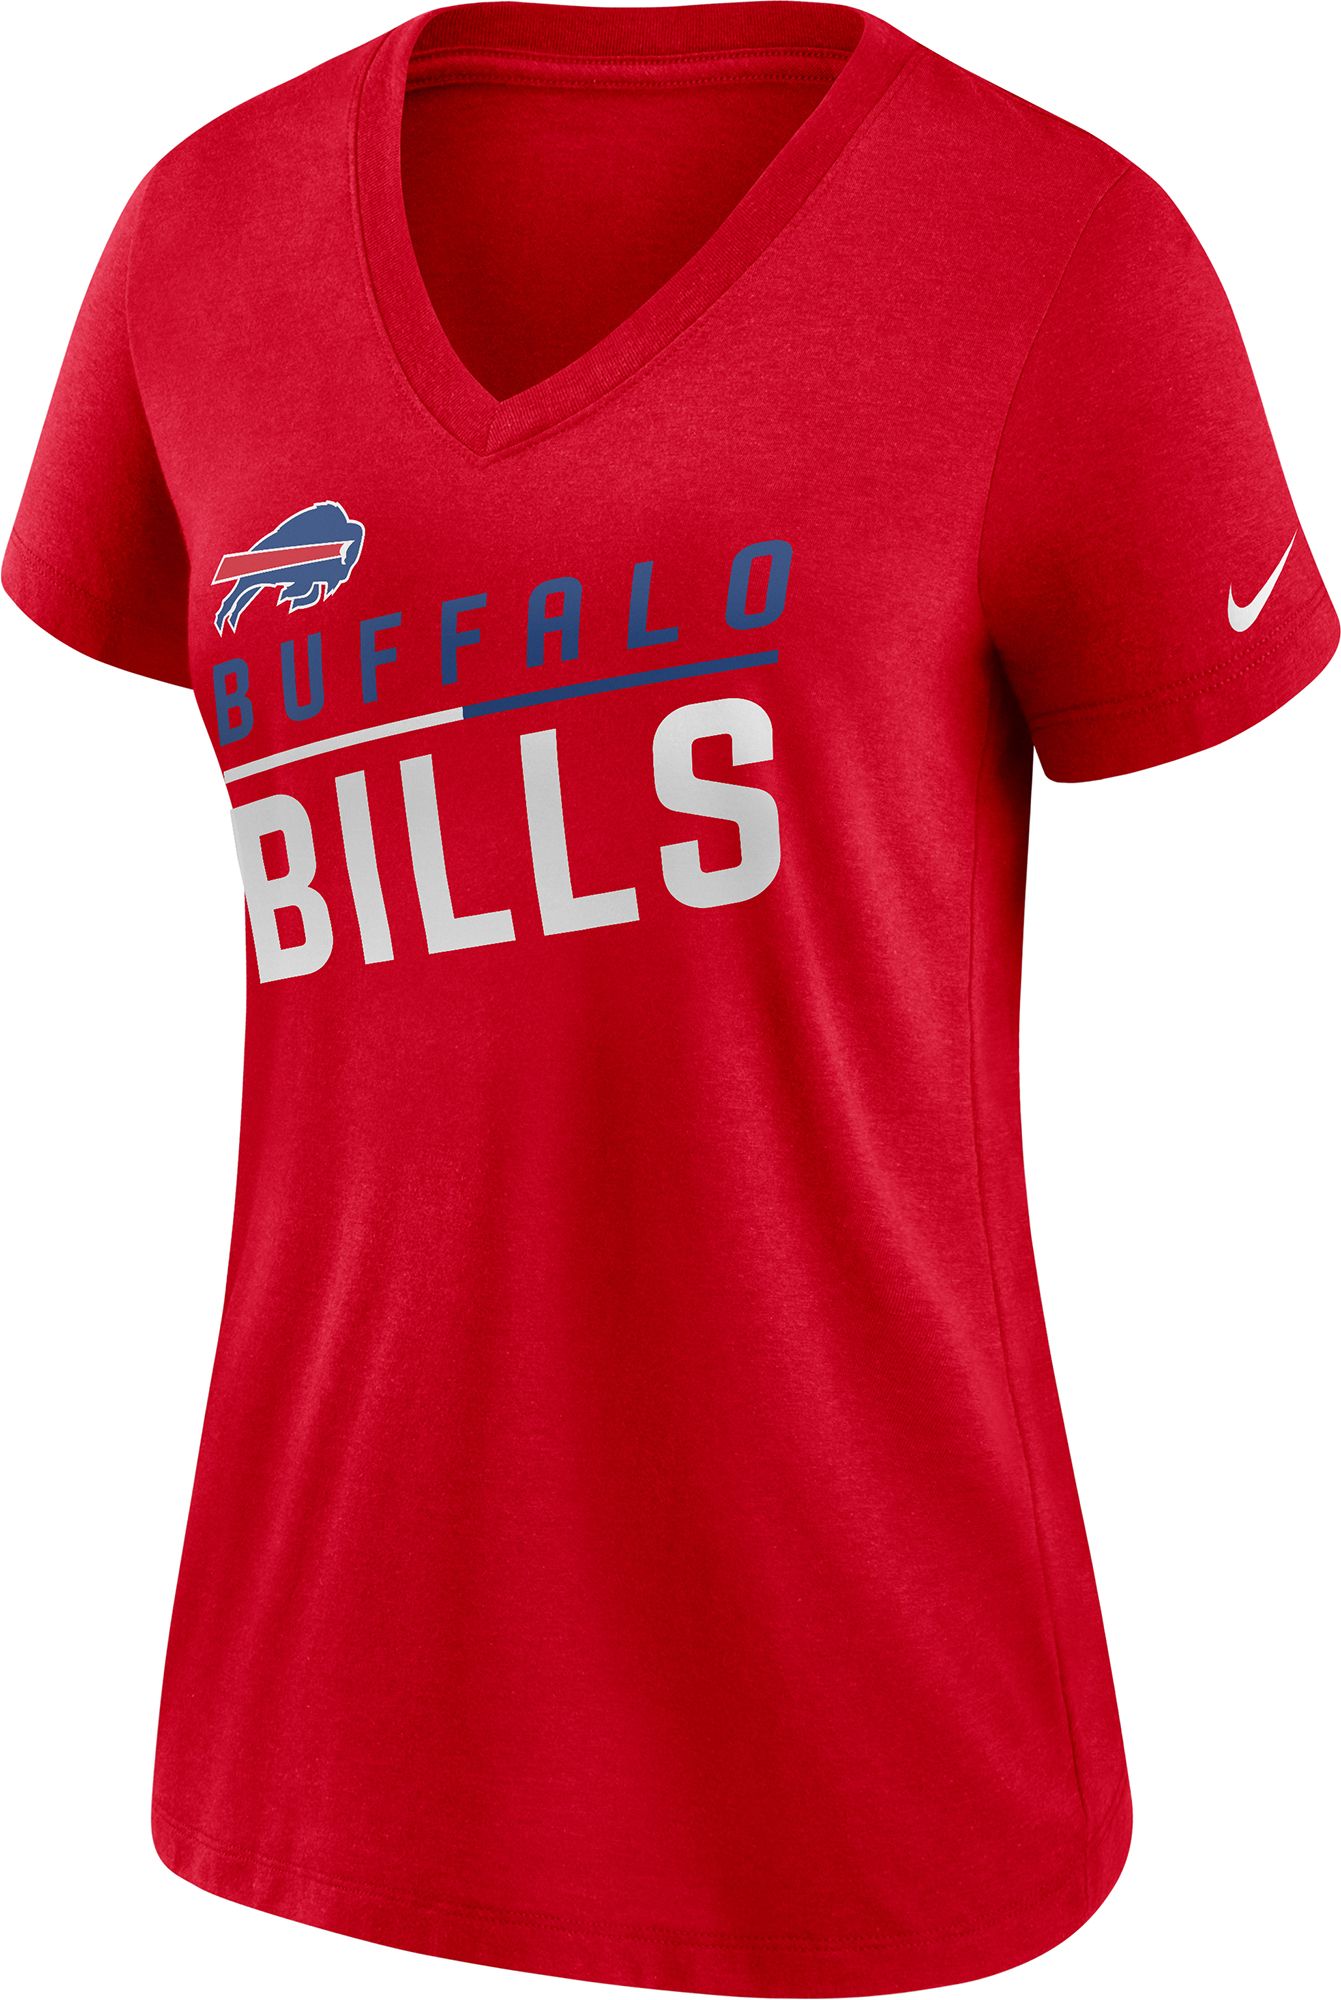 Nike / Women's Buffalo Bills Slant Red V-Neck T-Shirt